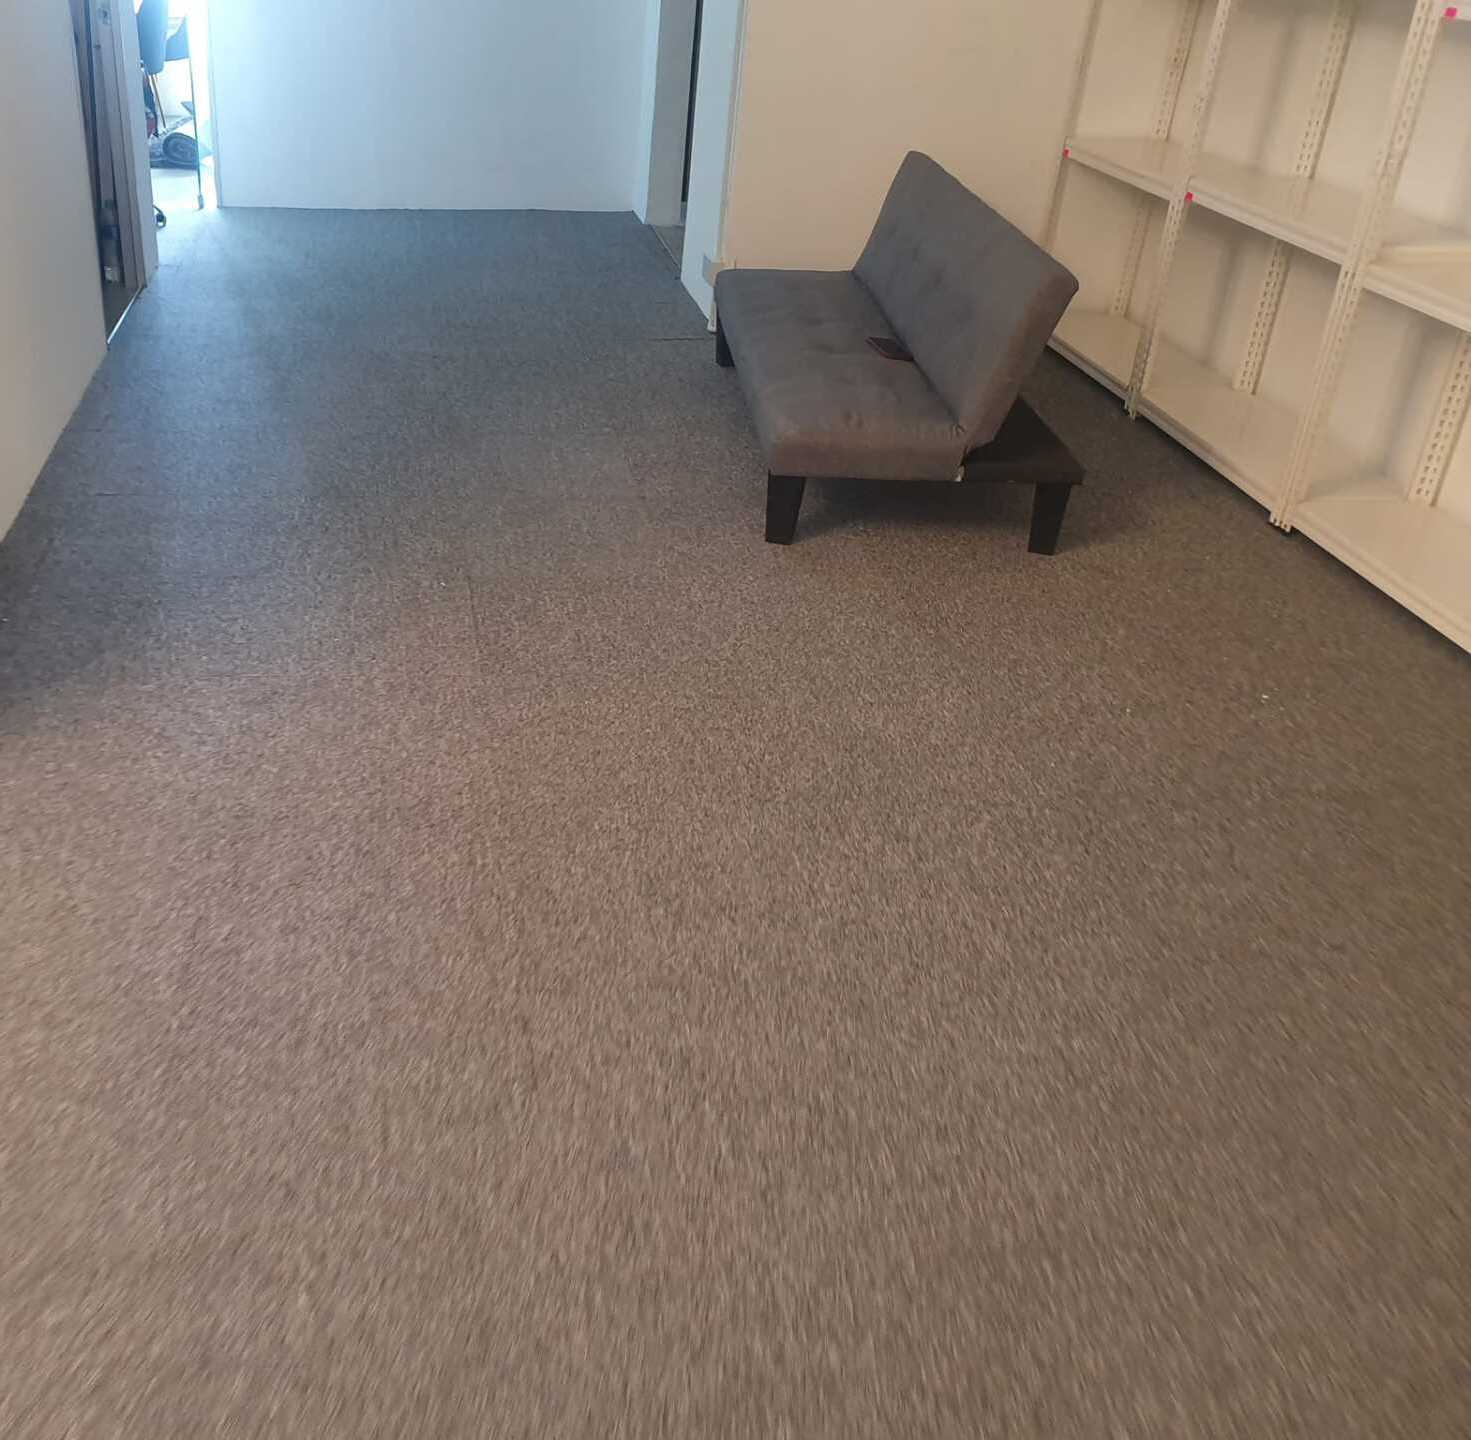 Fresh carpeting has been installed in this cozy condominium.